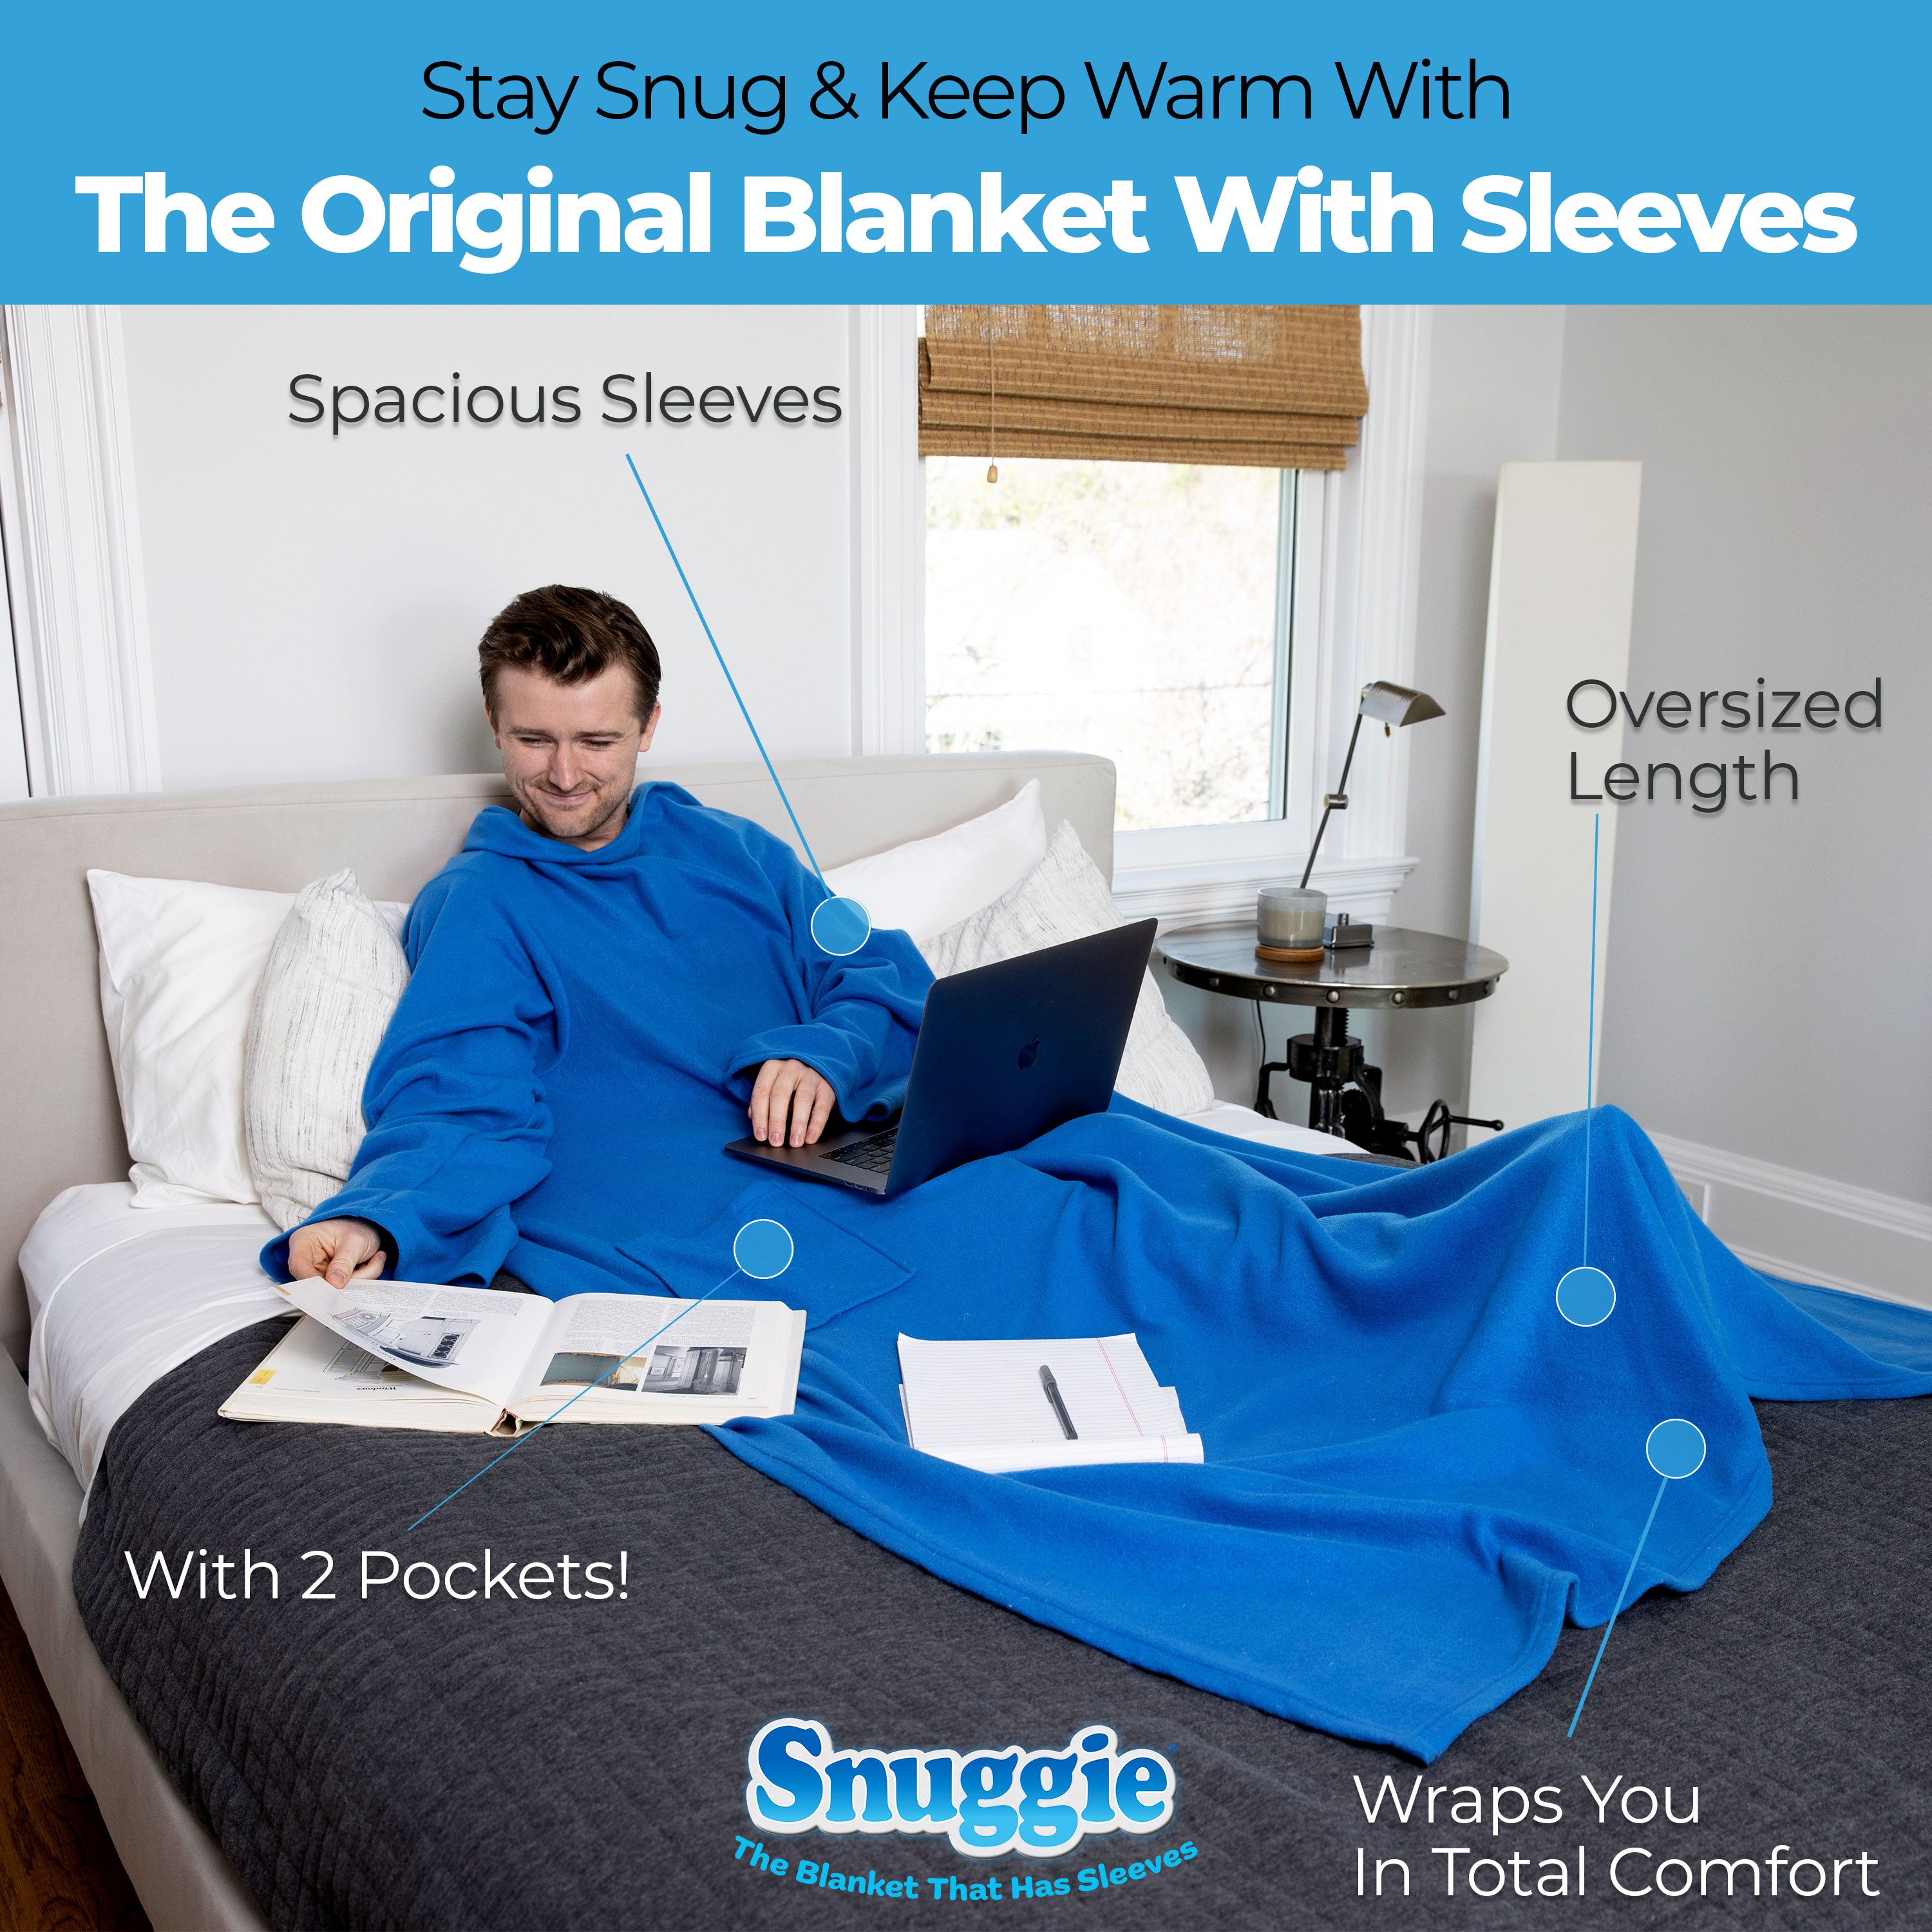 The Slanket - The Original Blanket With Sleeves